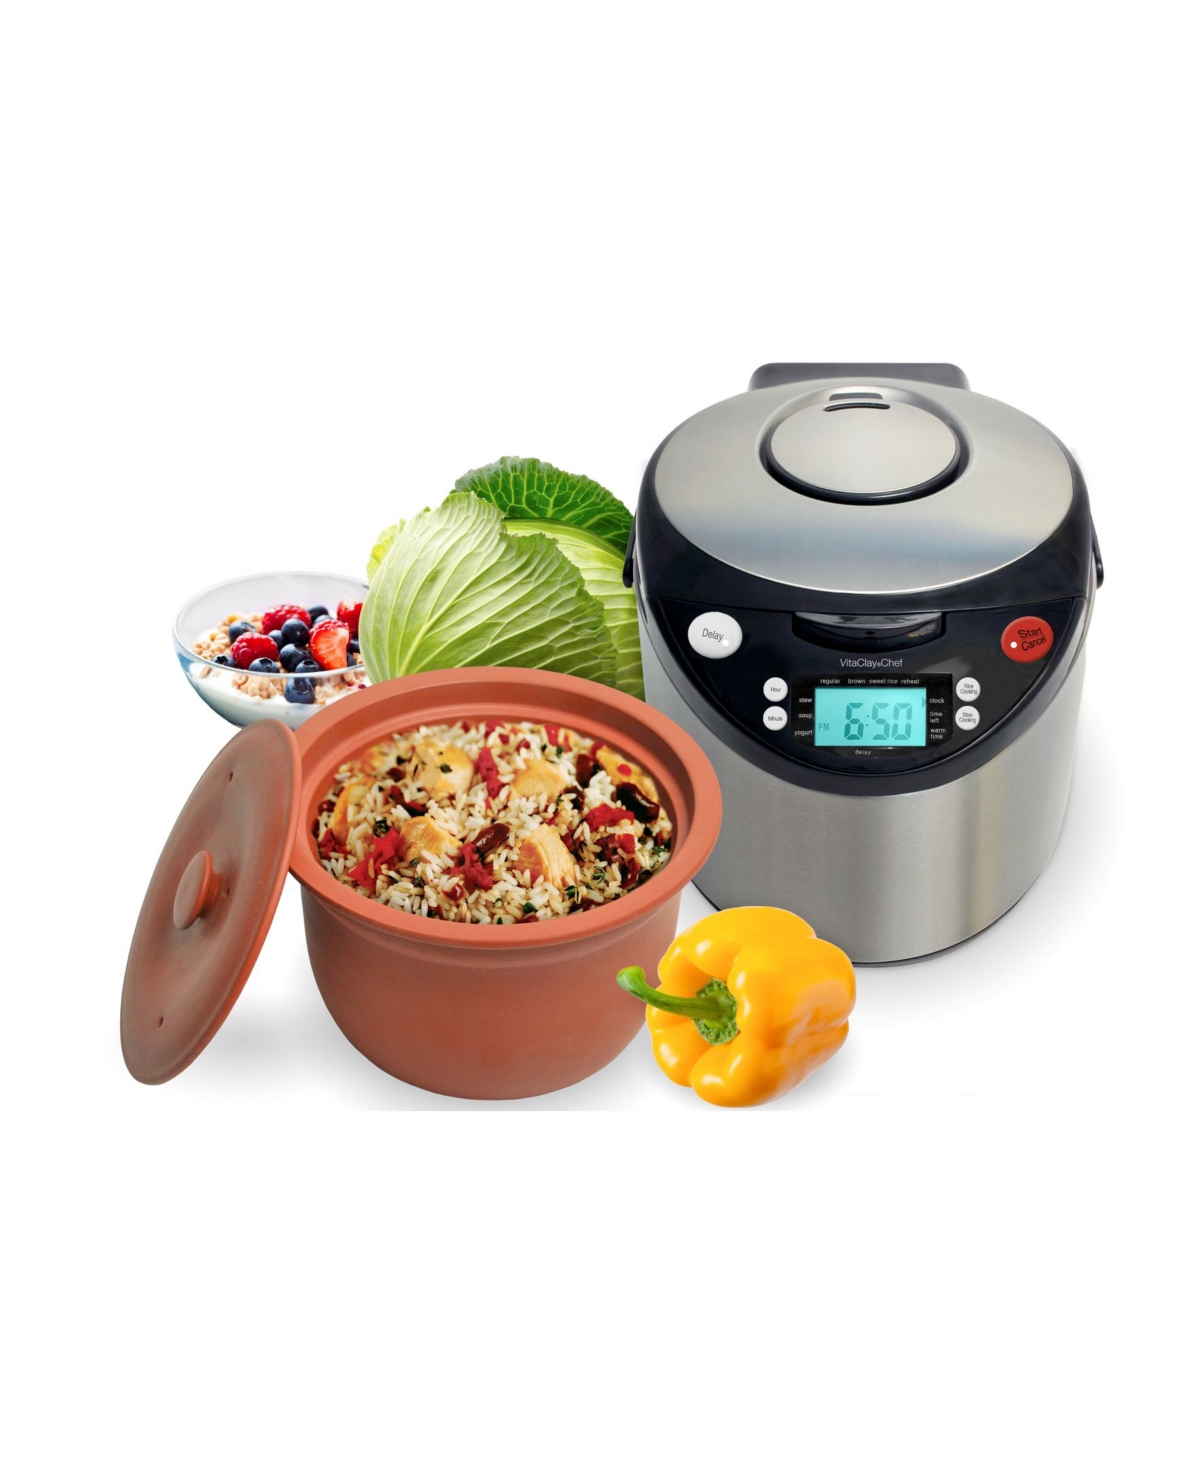 Smart Digital Express - A Rice Slow Cooker, A Digital Steamer and A Yogurt Maker, 3.2 Qt - Silver